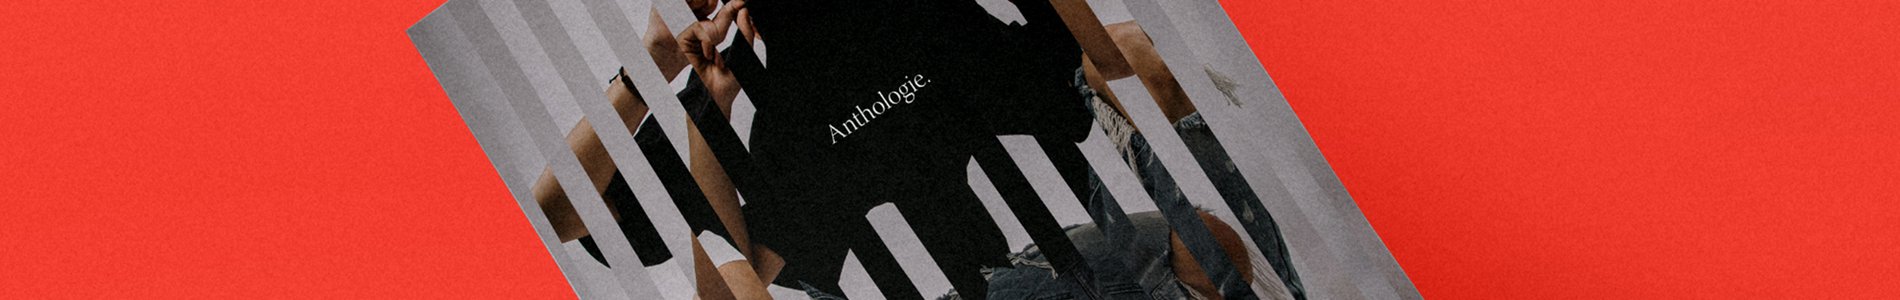 Anthologie_01.jpg